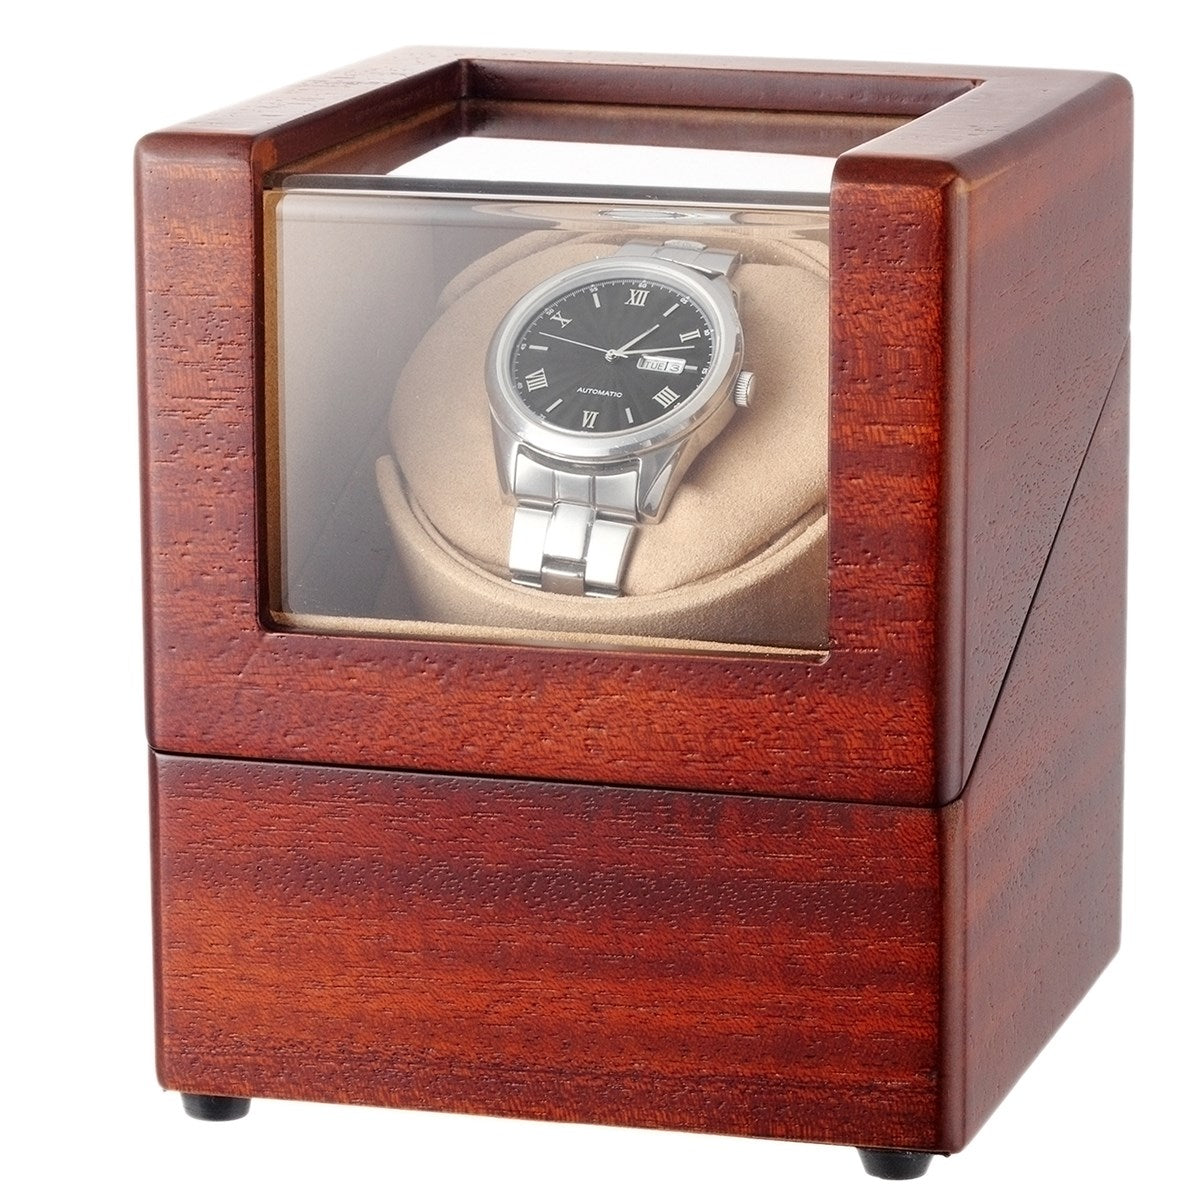 CHIYODA Automatic Single Watch Winder Handmade Wooden Watch box With Quiet Mabuchi Motor and 12 Rotation Modes